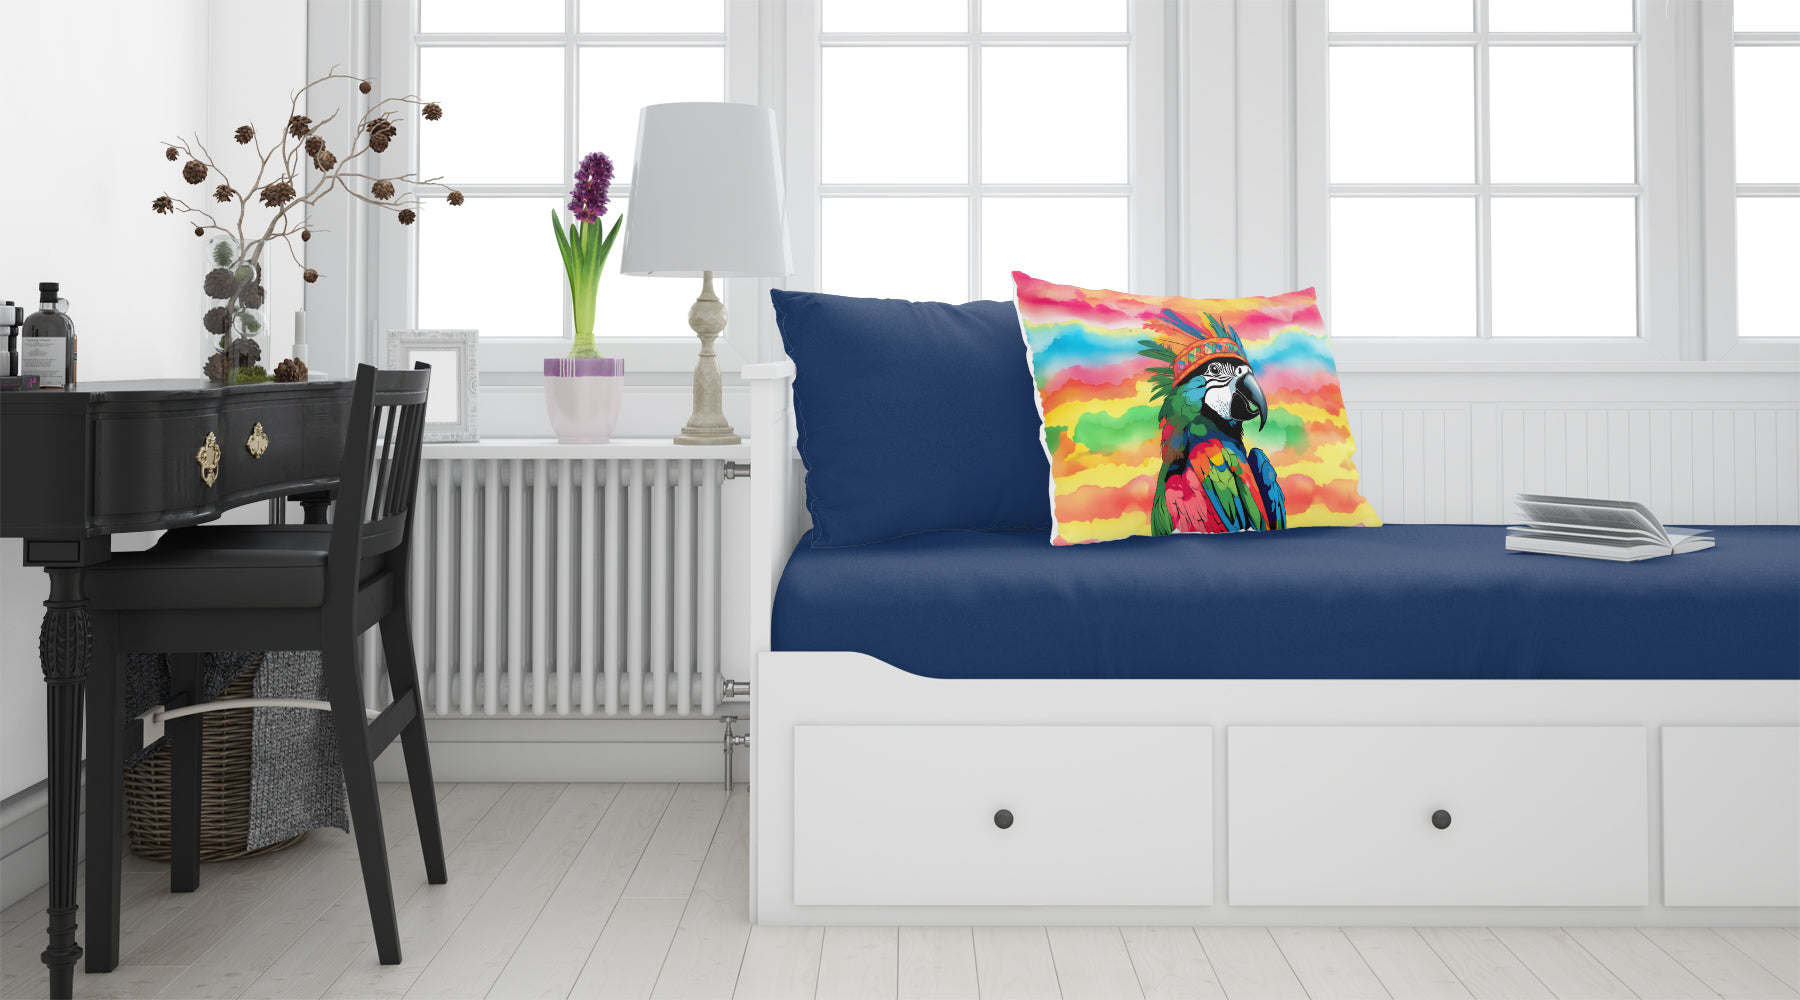 Buy this Hippie Animal Parrot Standard Pillowcase